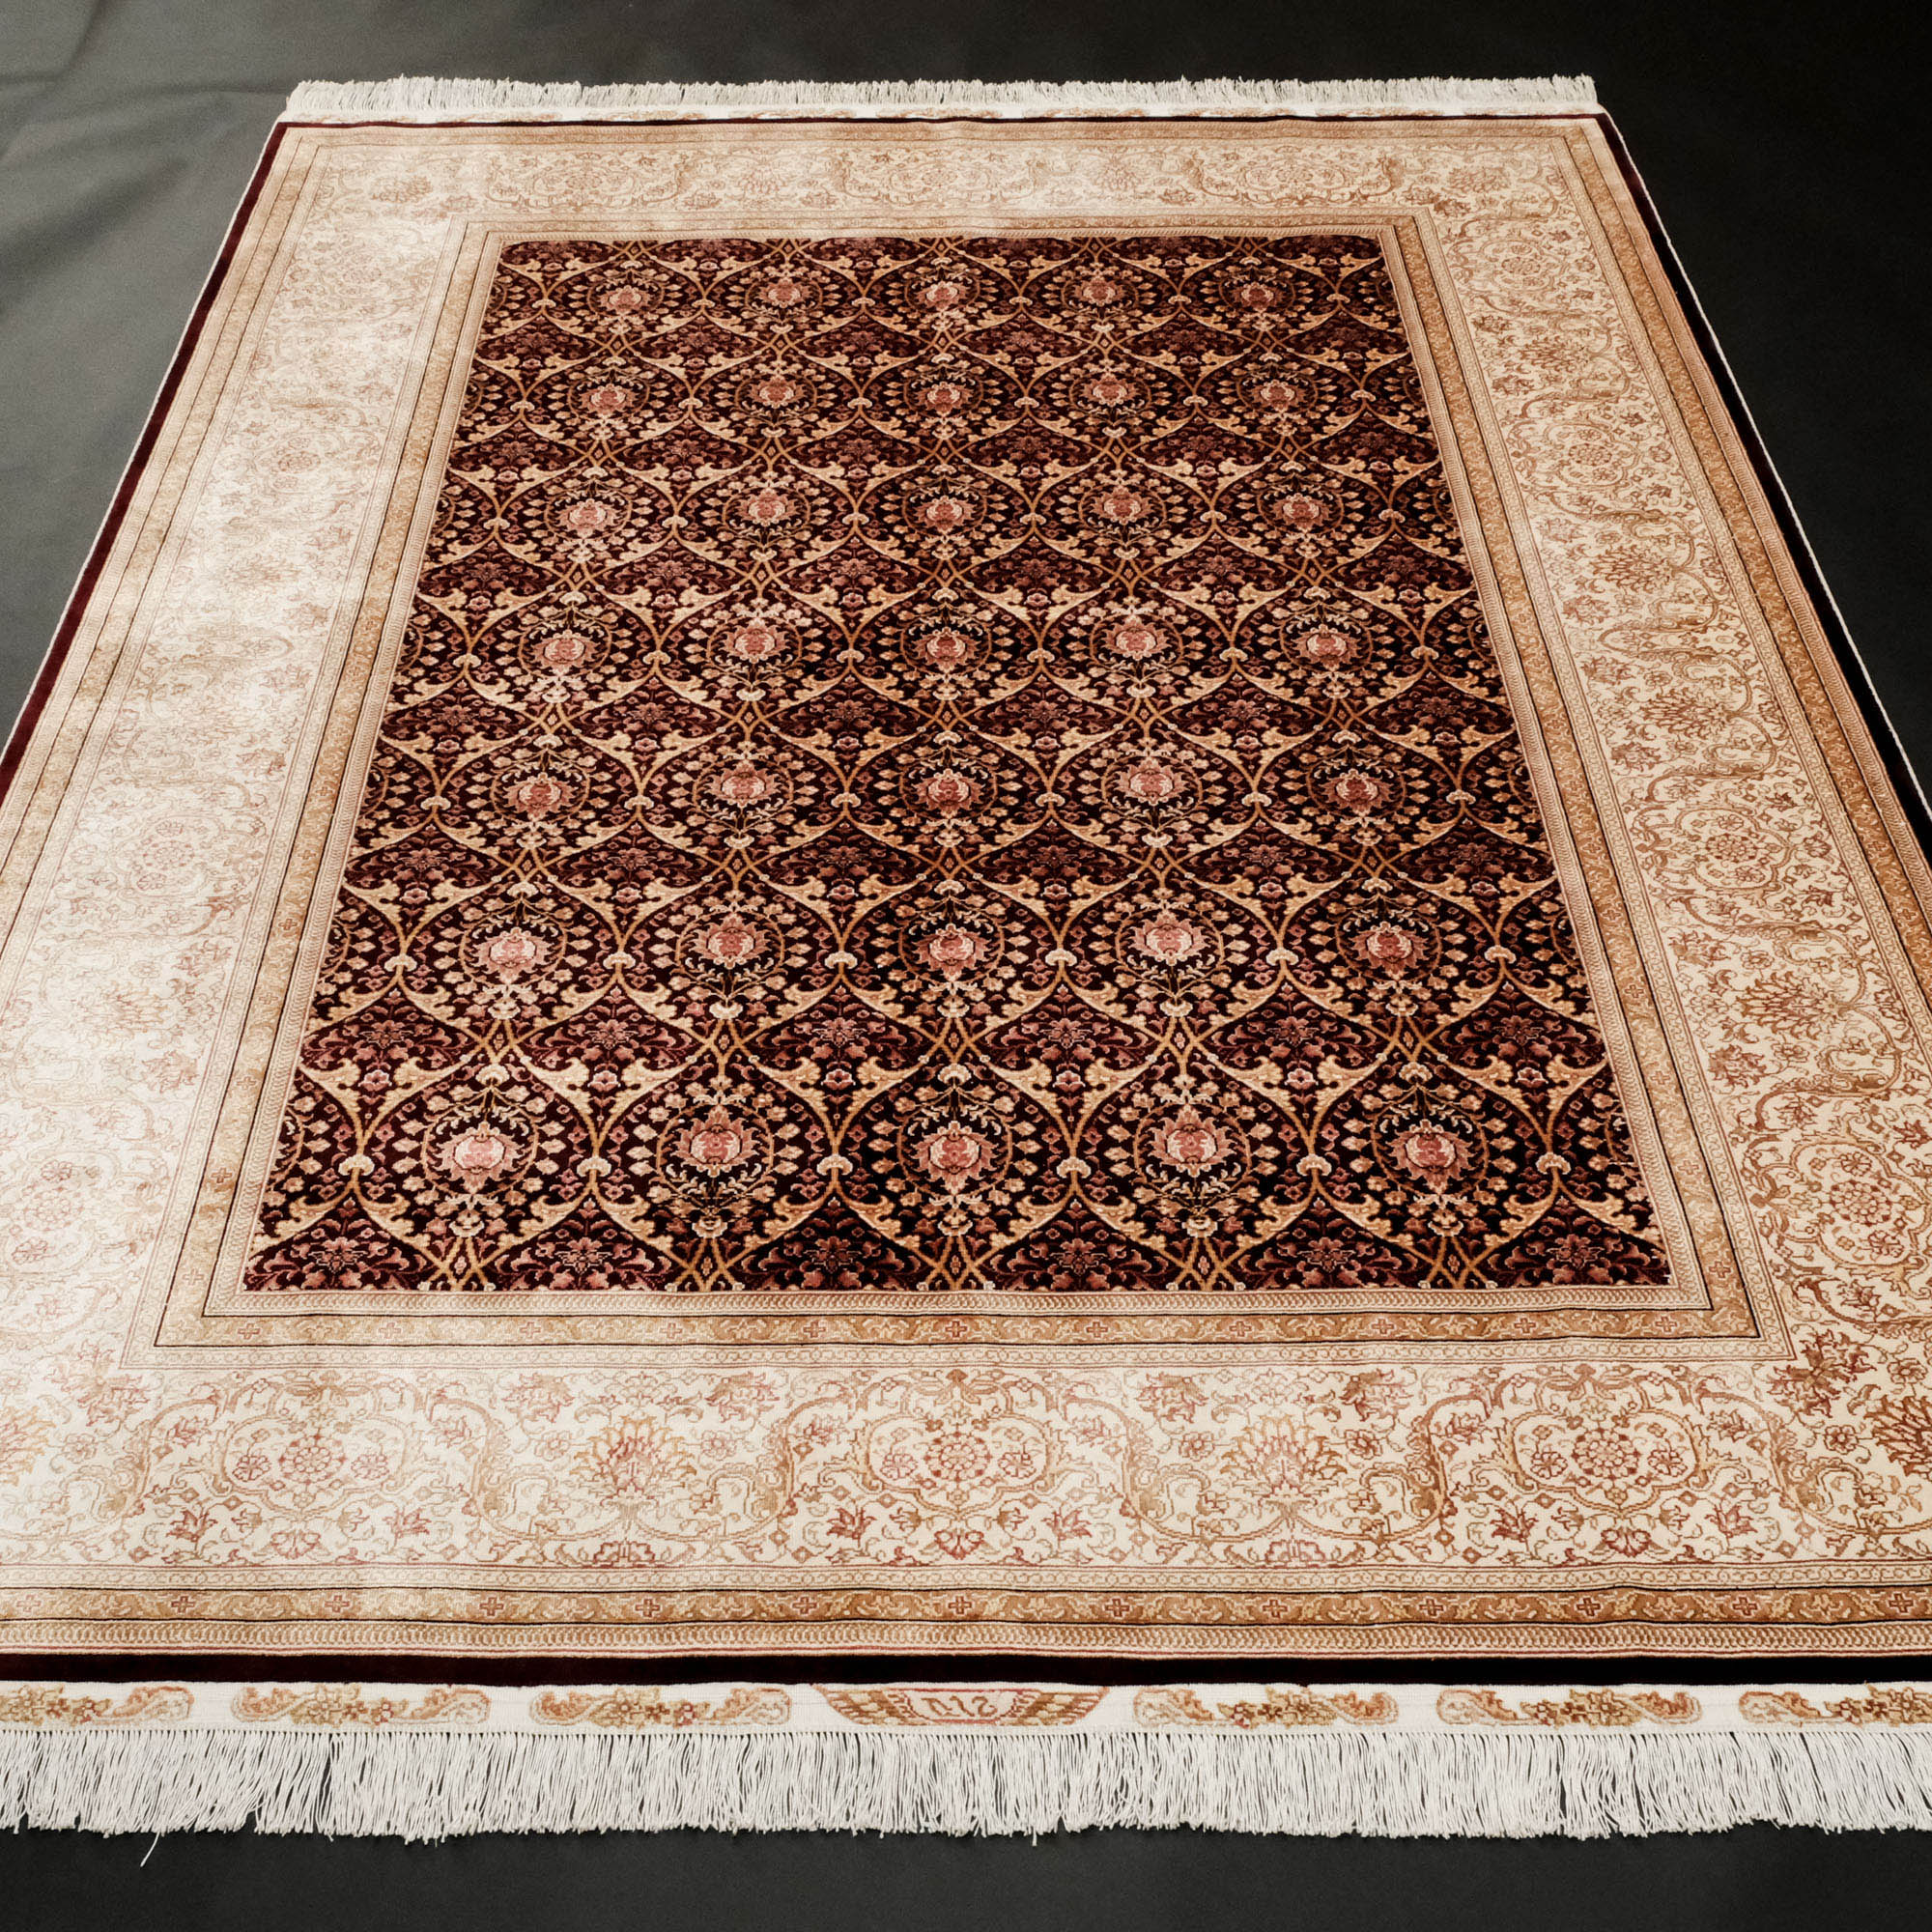 Hand Woven Red Cotton Viscose Silk Thread Classic Carpet